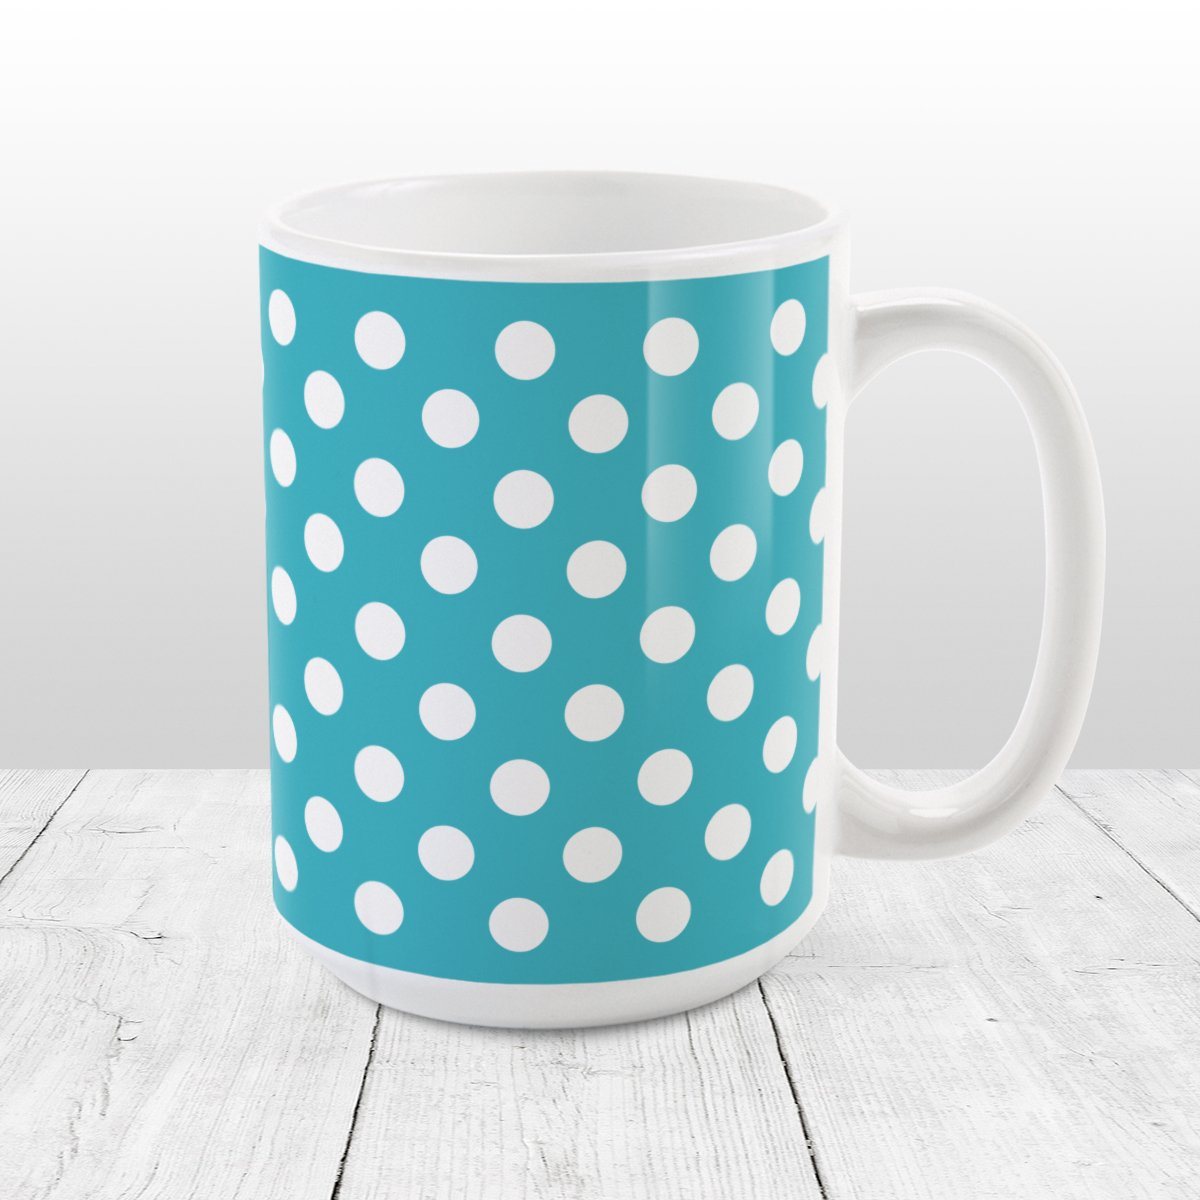 Turquoise Polka Dot Pattern Mug at Amy's Coffee Mugs